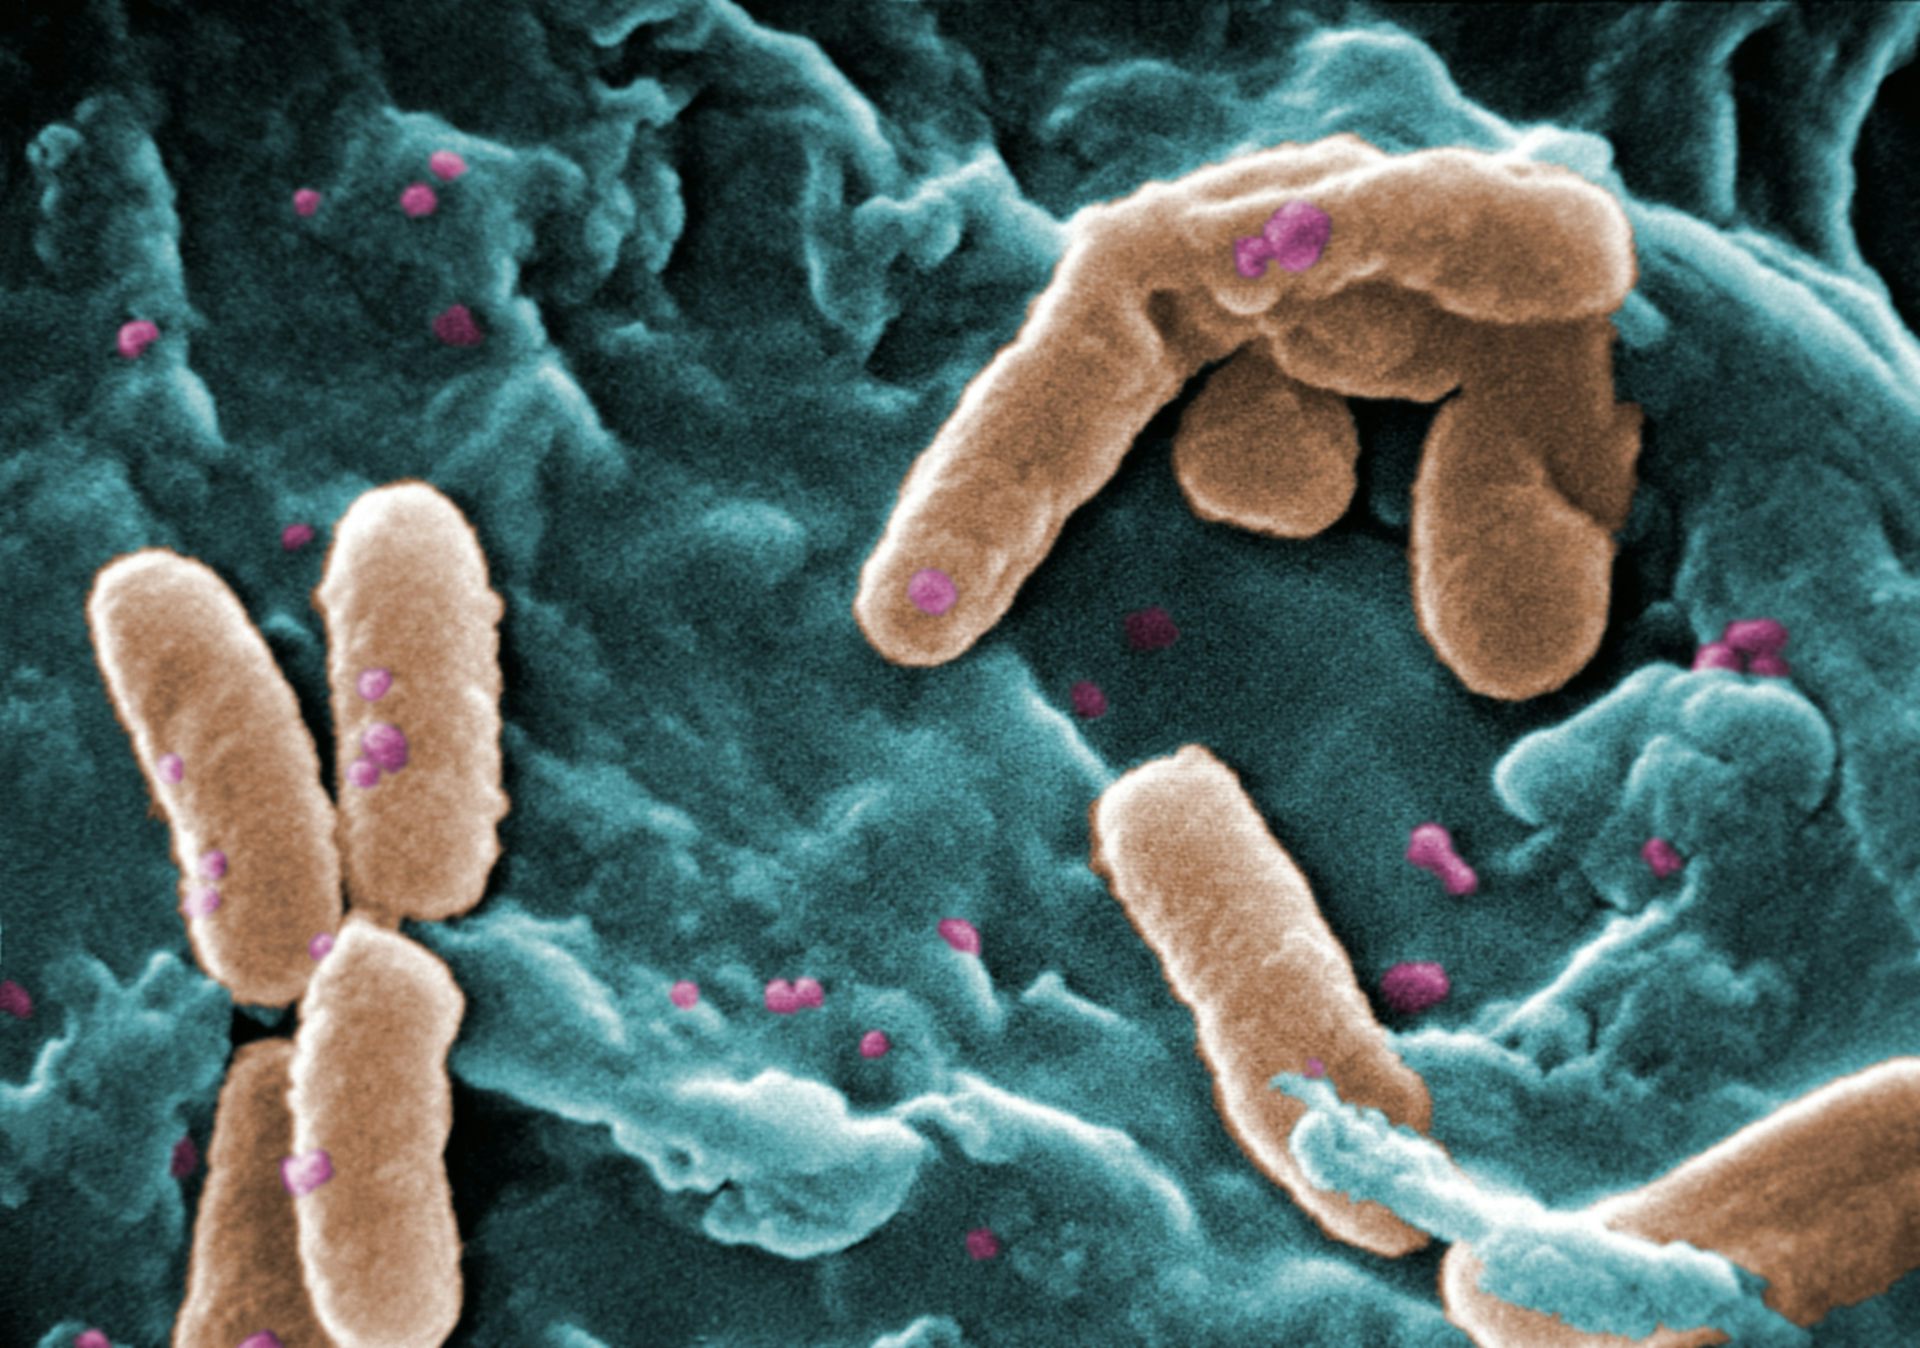 bacteria plush toy